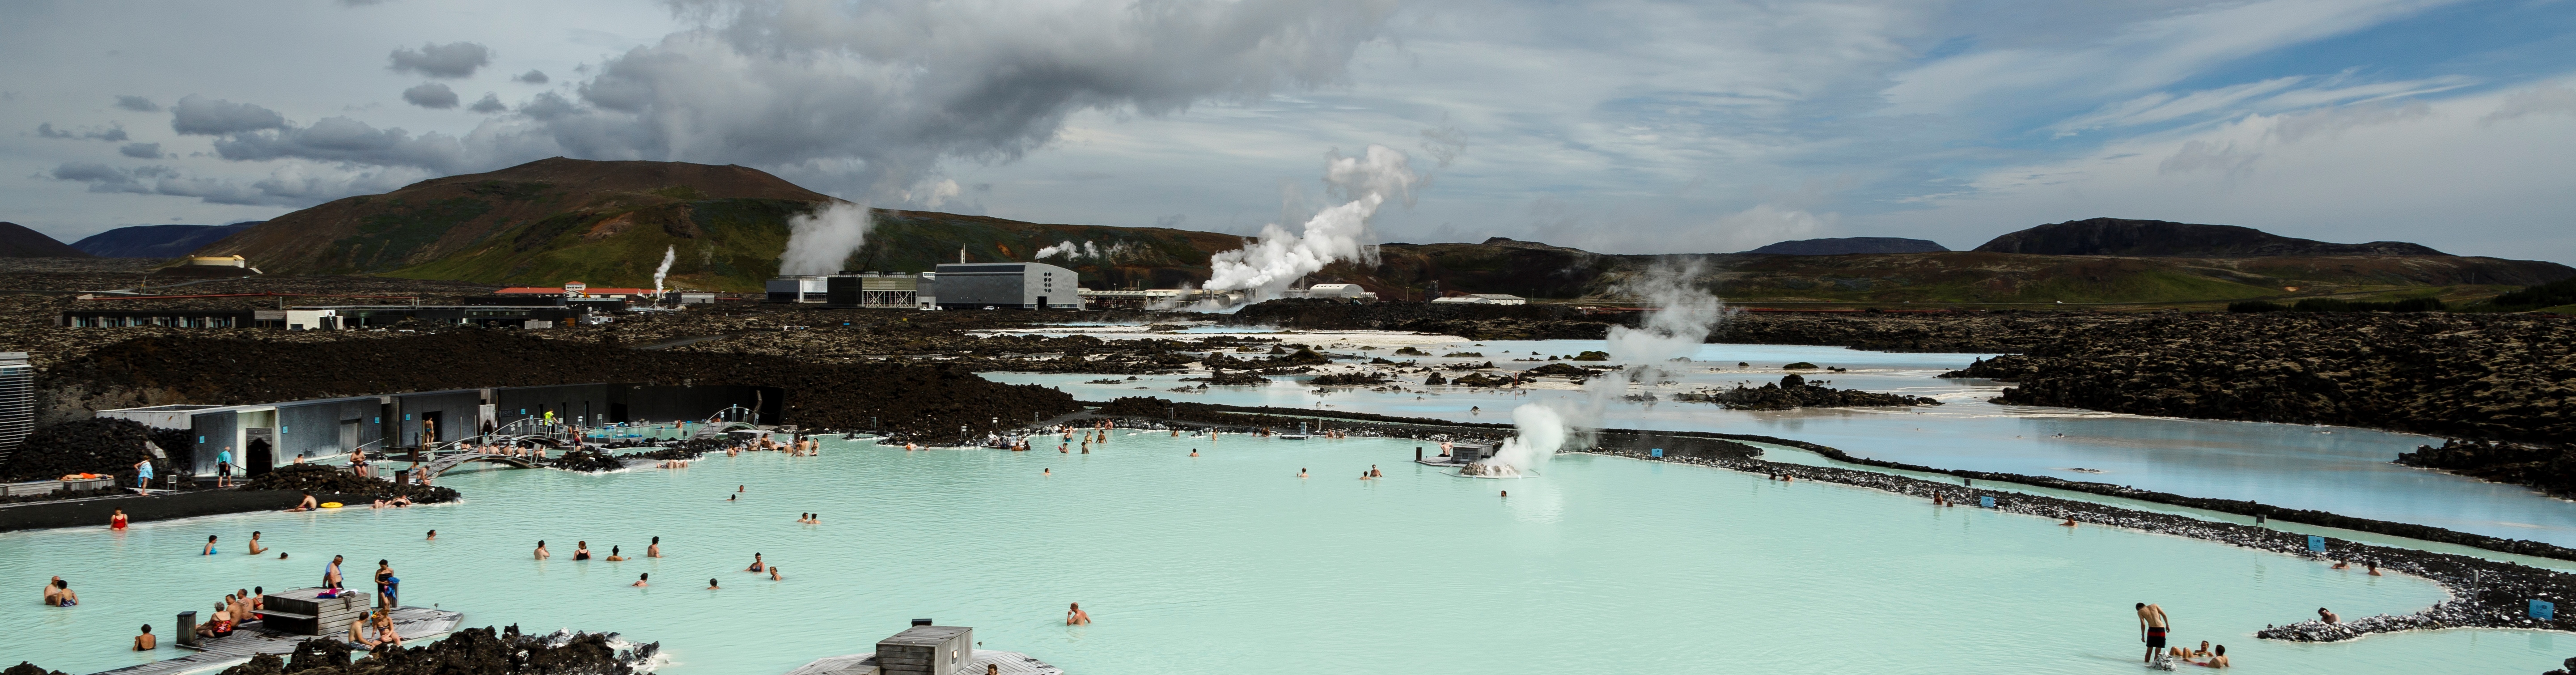 Blue Lagoon Geothermal Spa, Iceland 